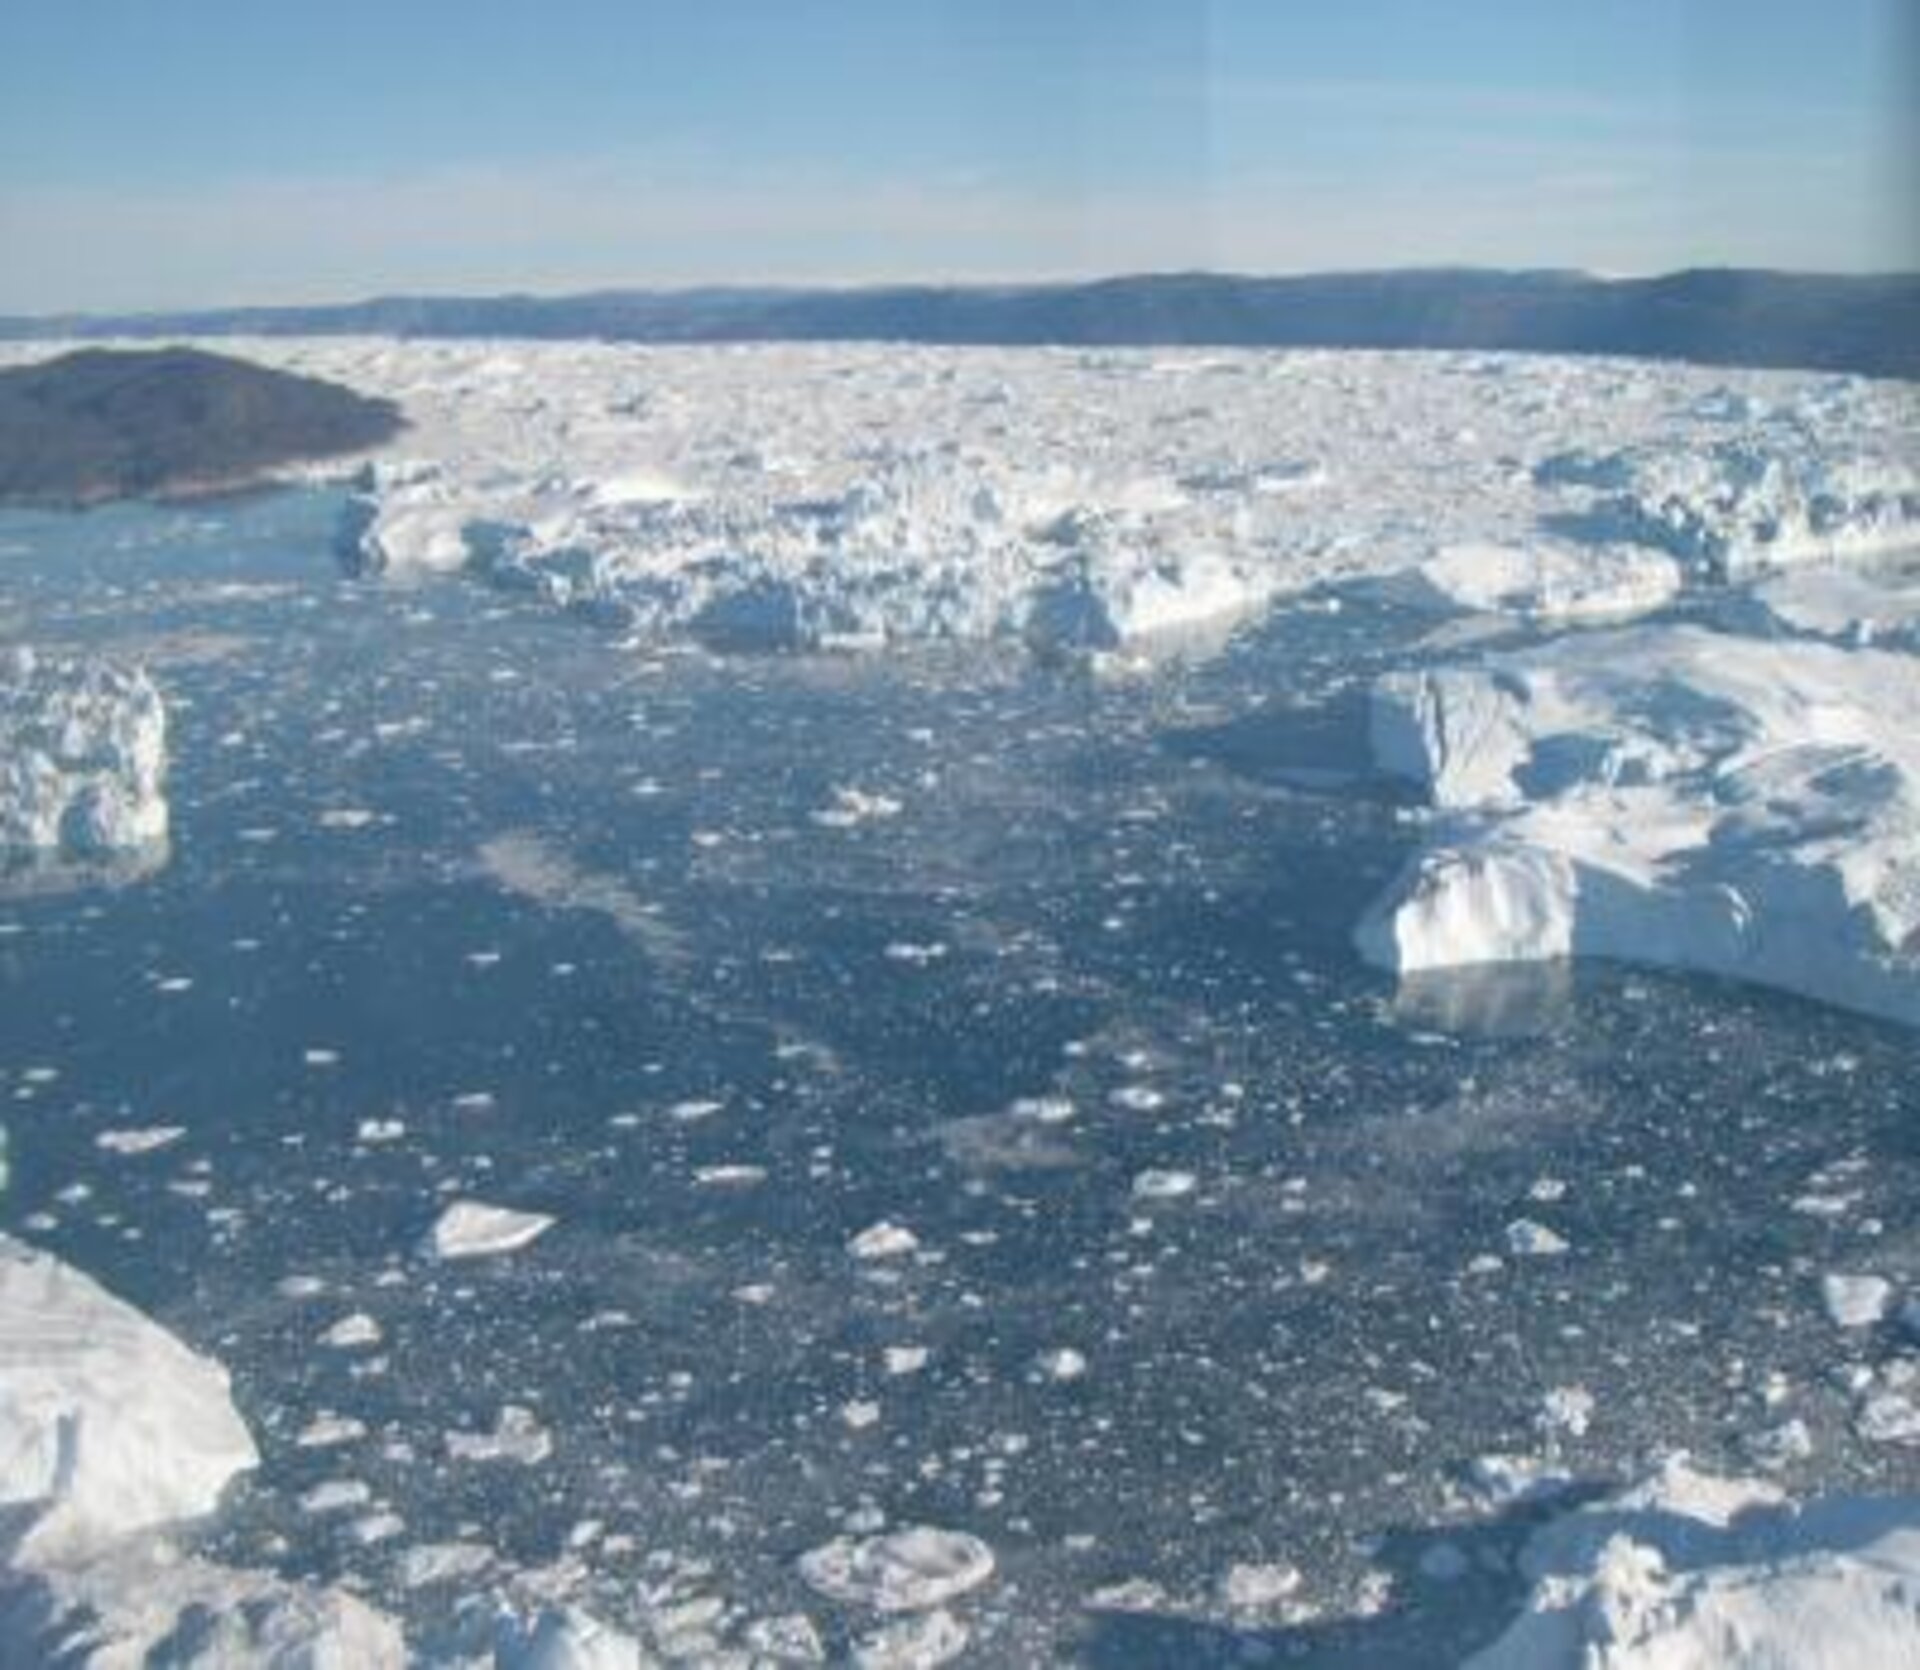 Edge of Greenland ice sheet